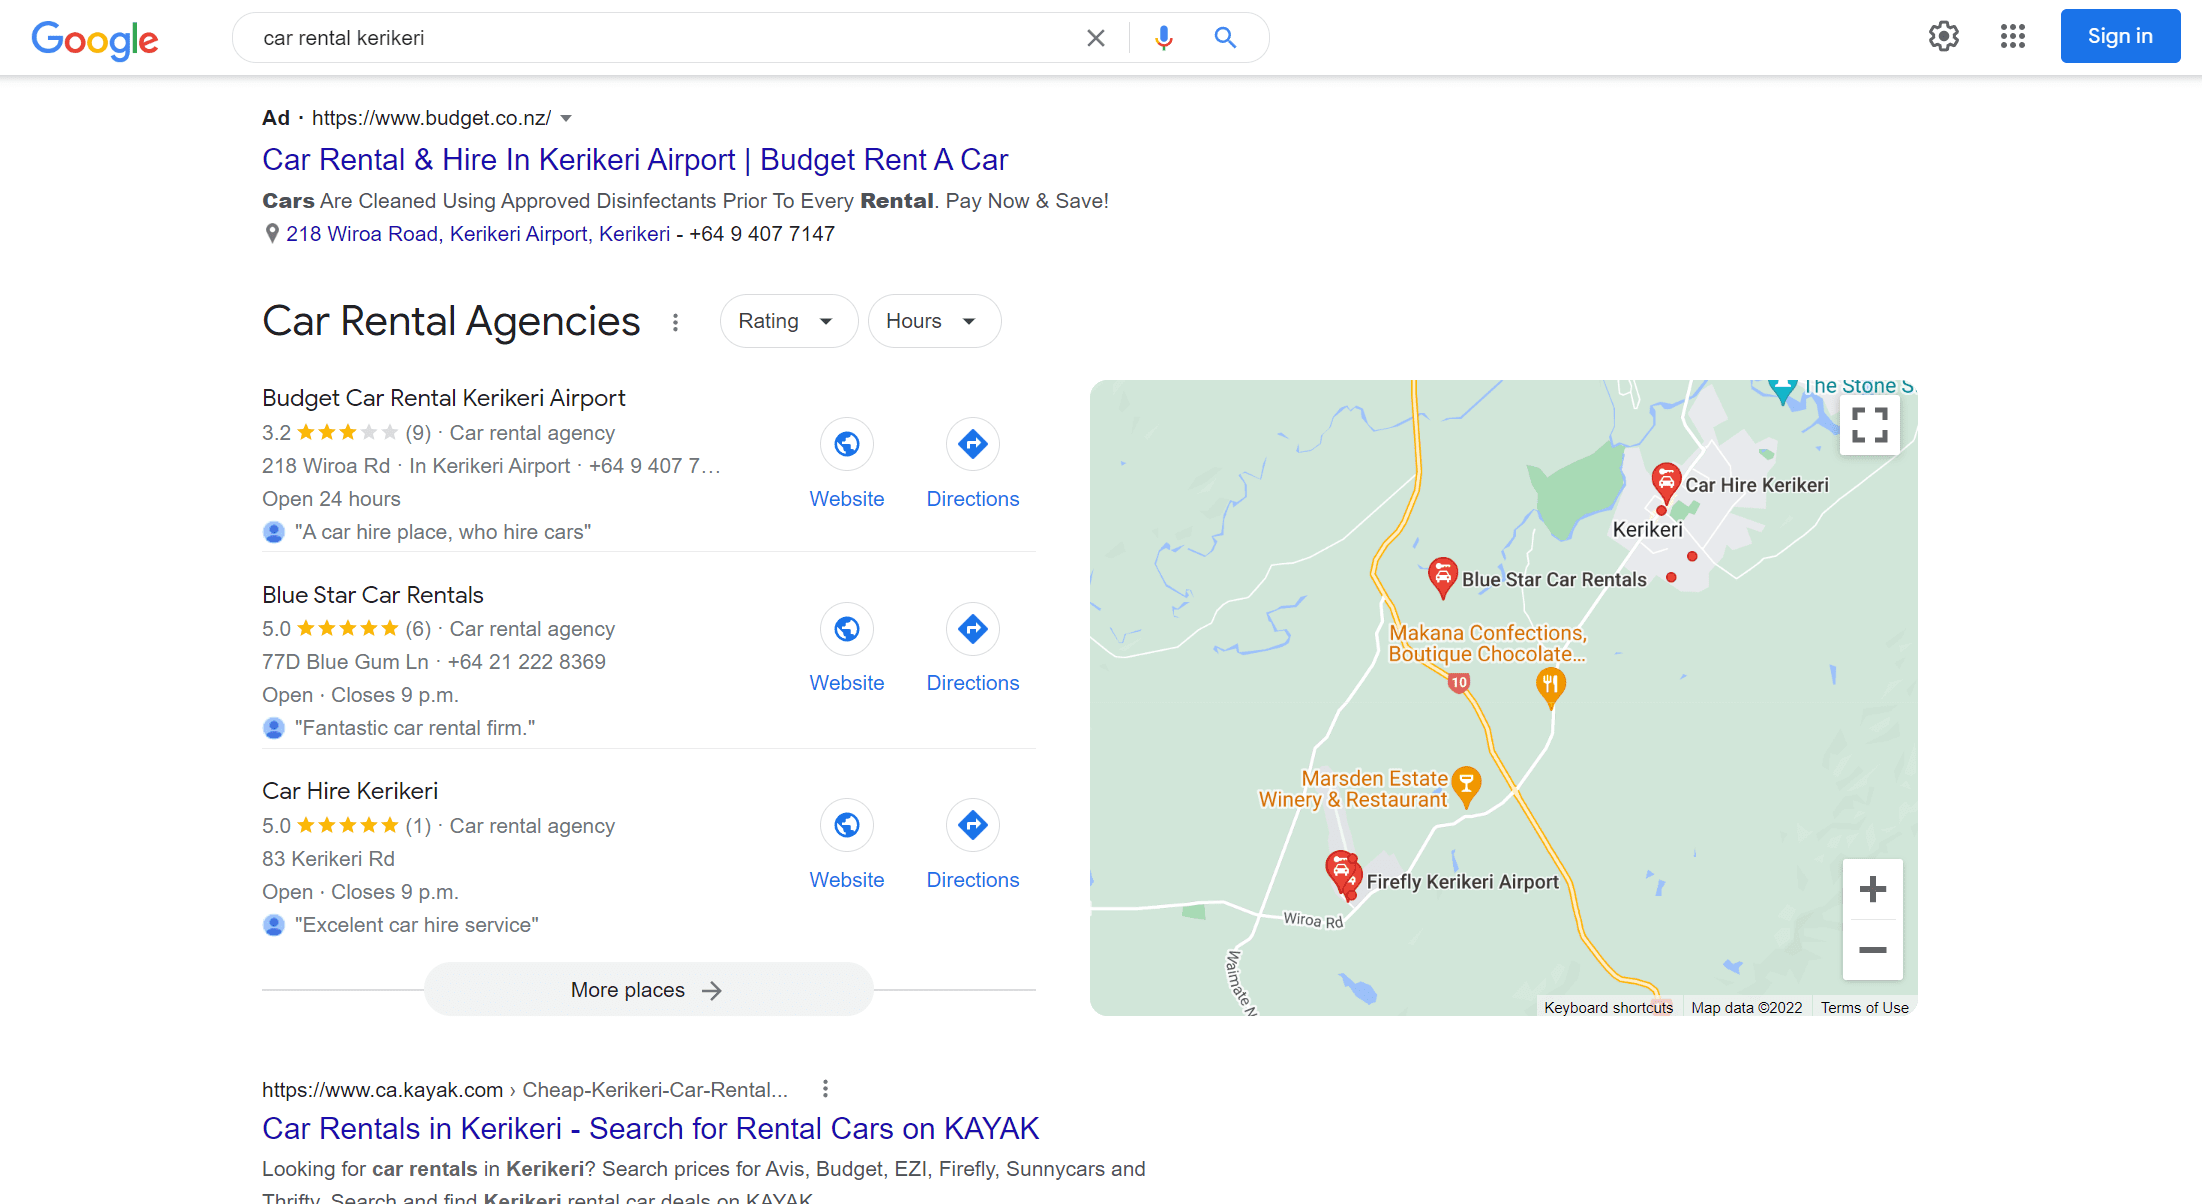 Screenshot showing Google search results for "car rental kerikeri" featuring Blue Star